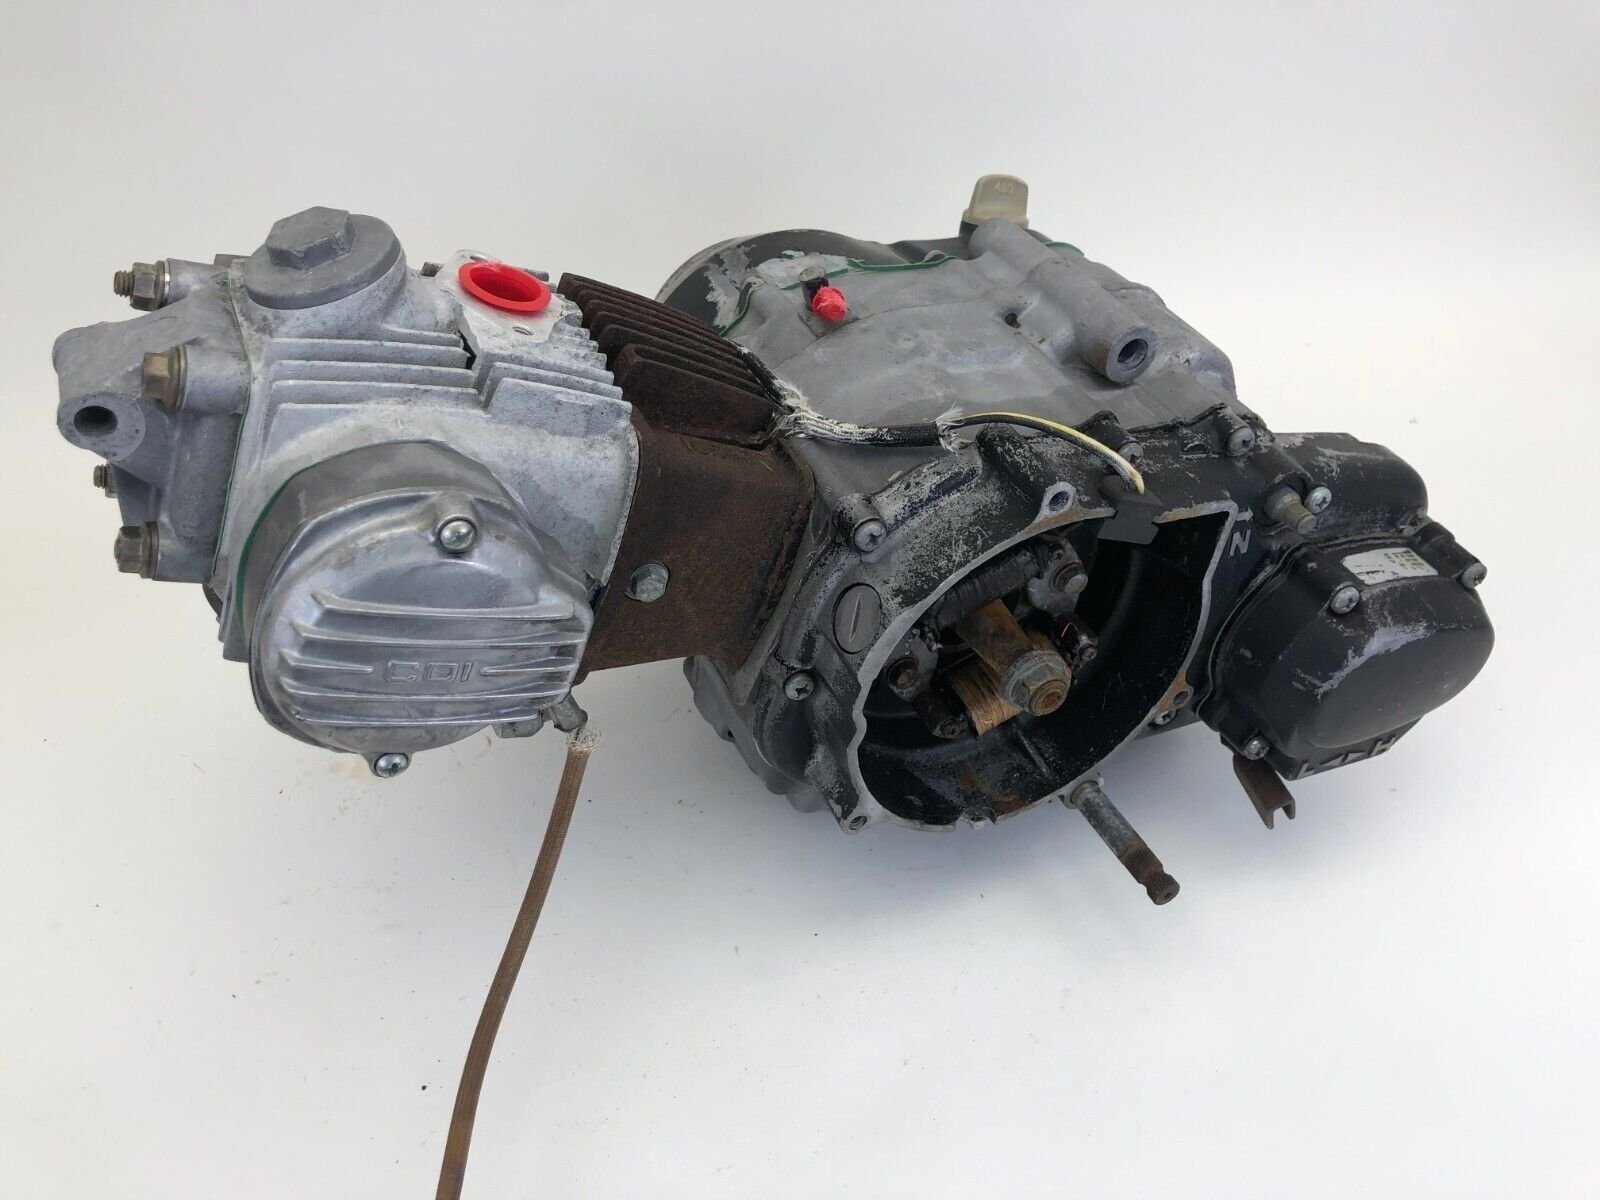 1985 Honda ATC110 Engine (Locked up)